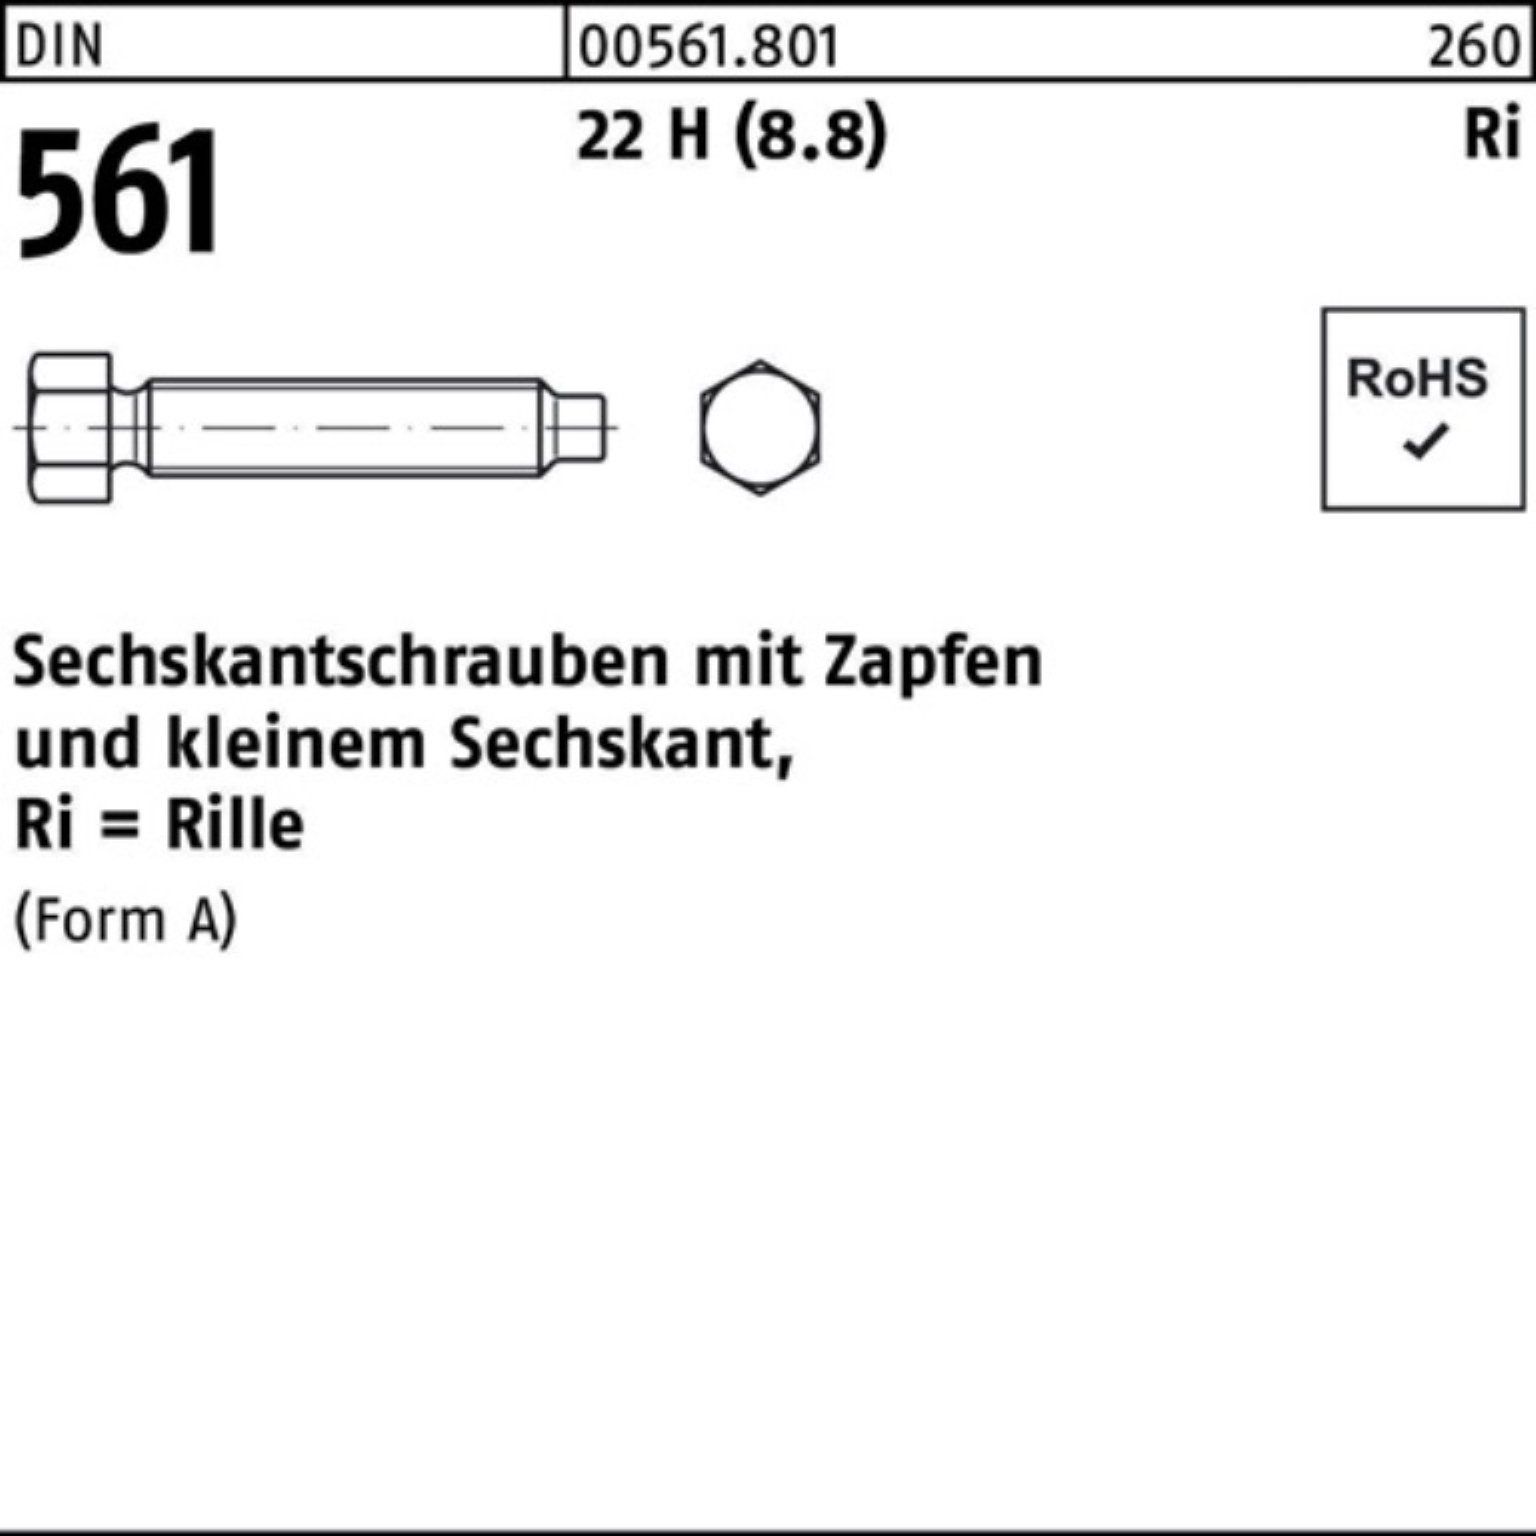 Reyher Sechskantschraube 100er Pack Sechskantschraube 22 AM St Zapfen DIN 25 100 (8.8) 6x H 561